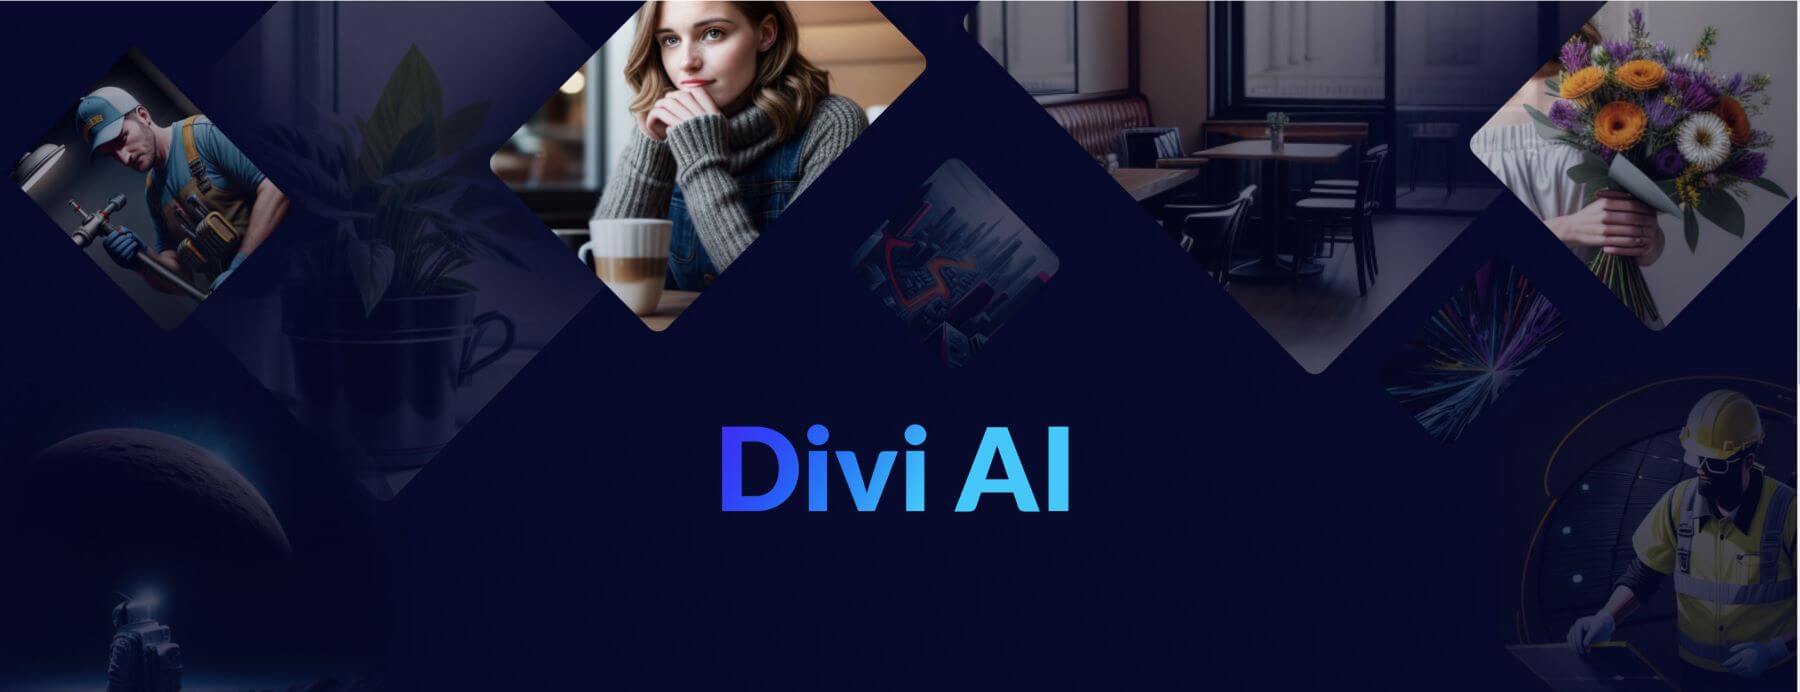 Divi AI 用于图像和文本生成